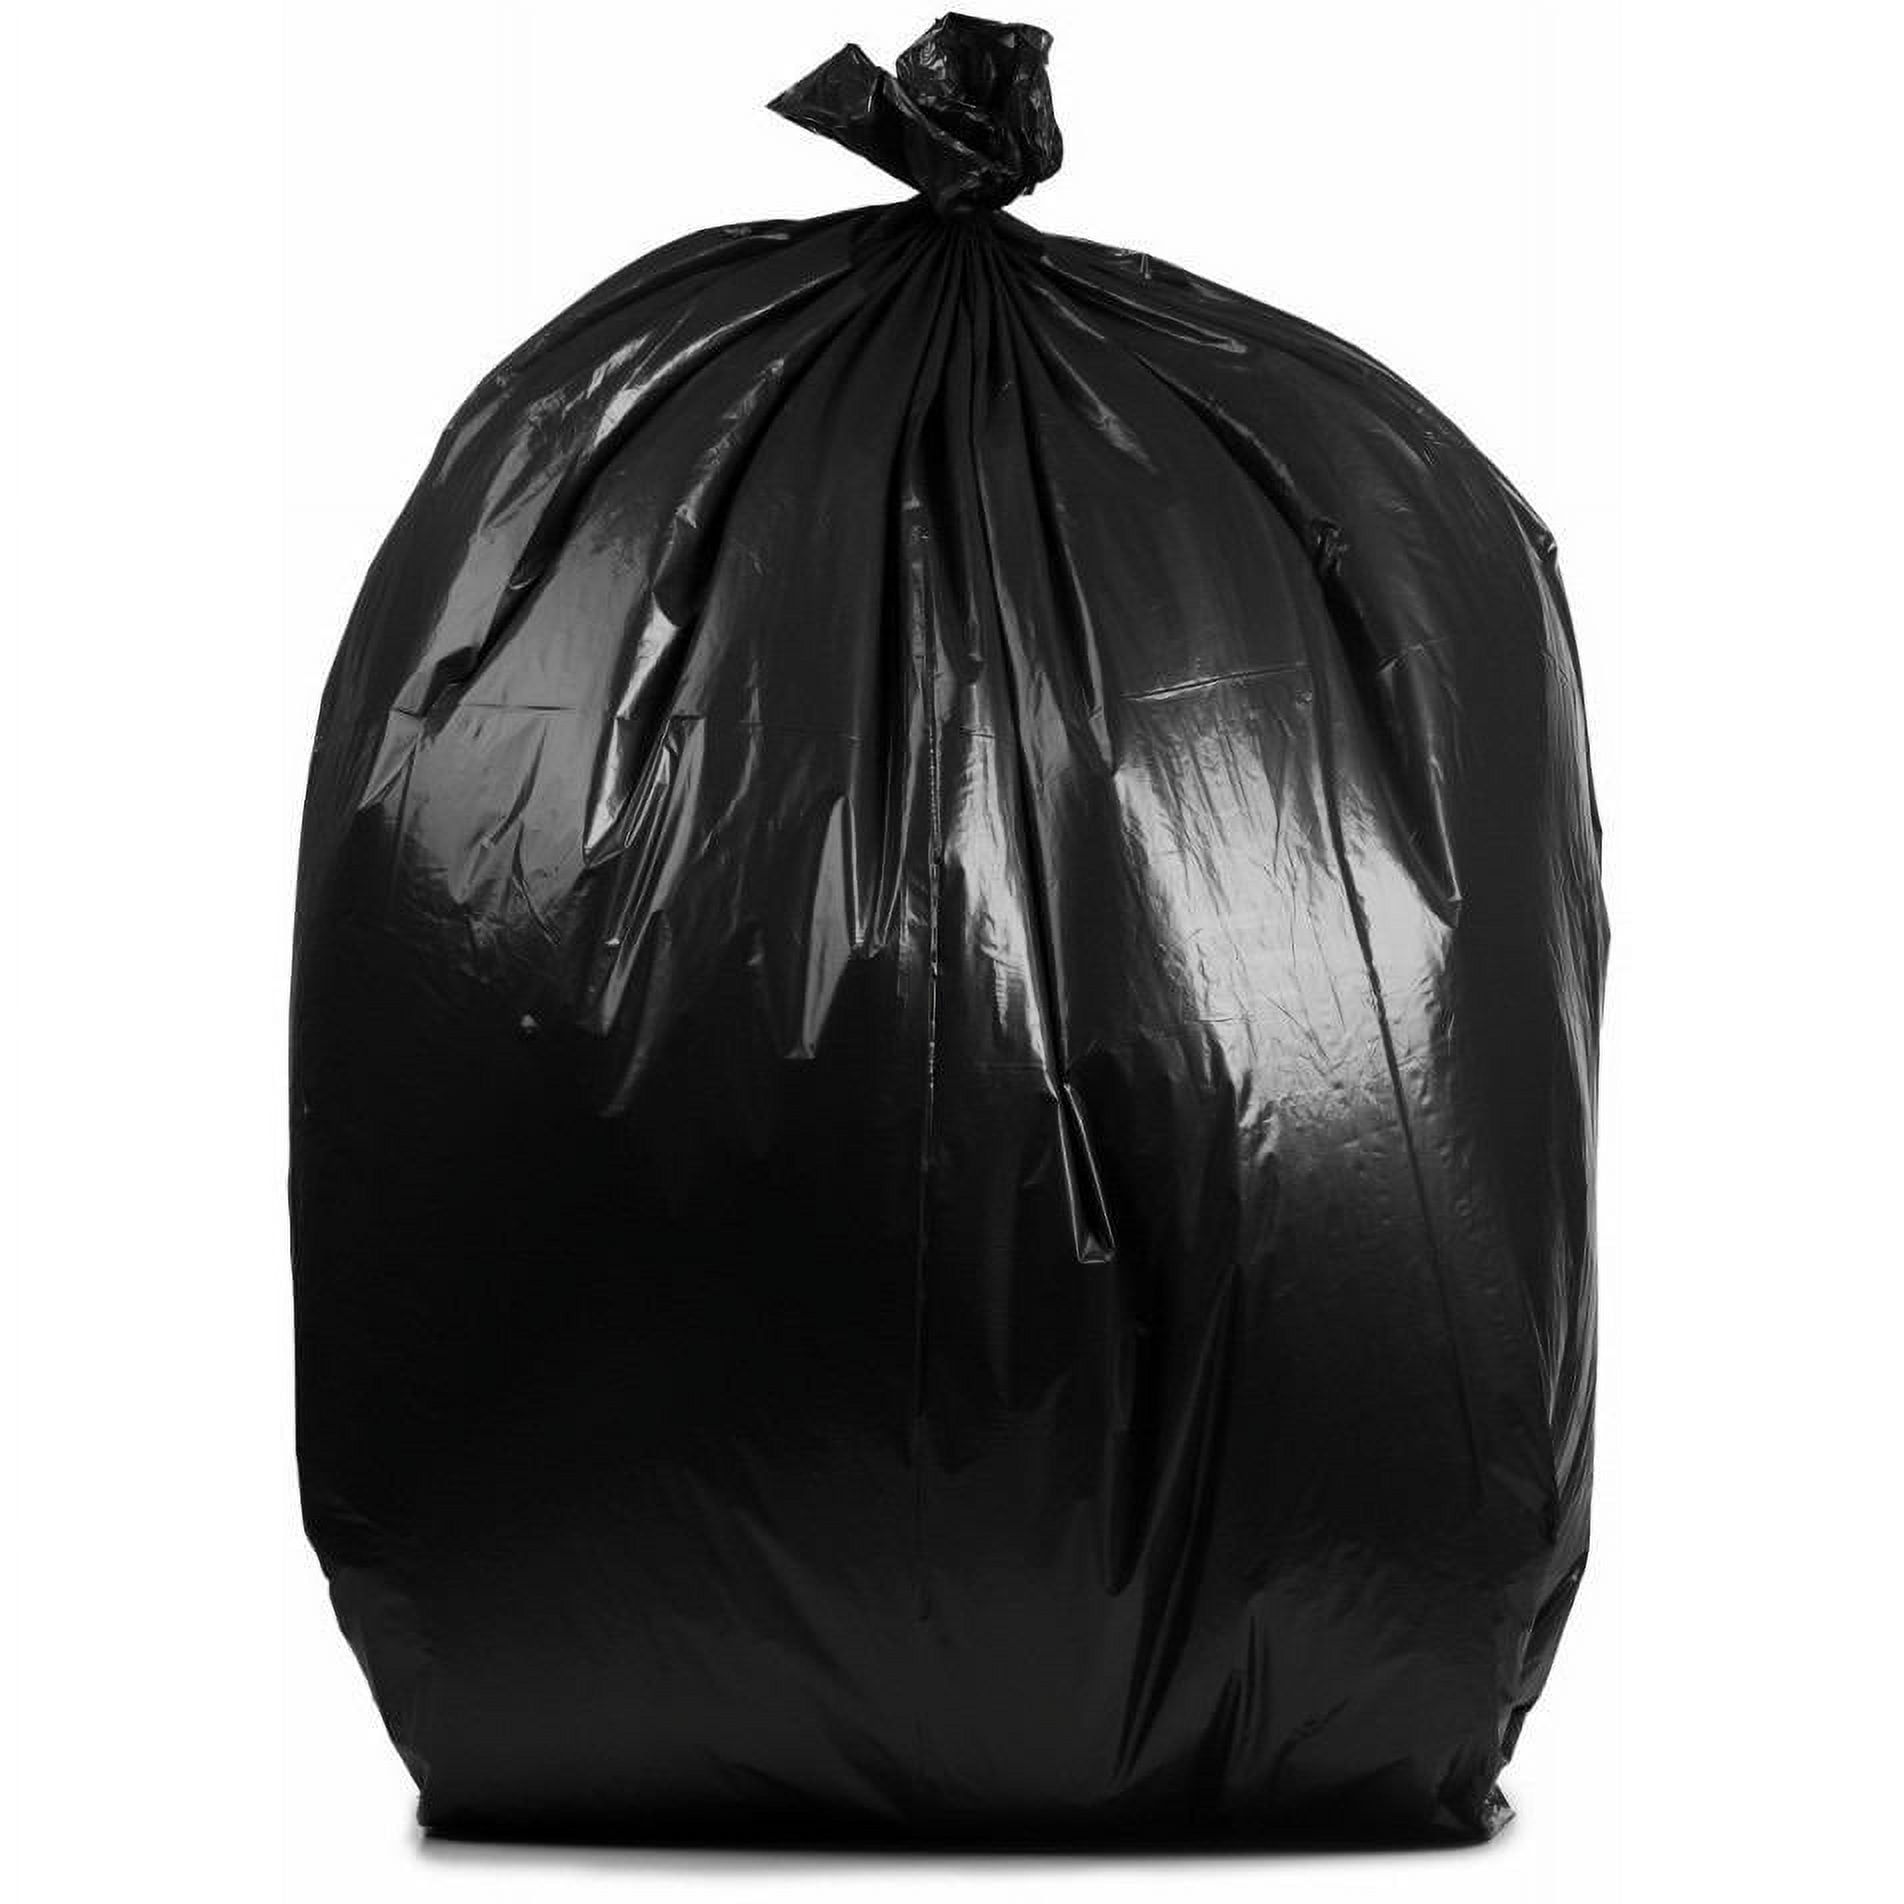  NETKO Clear Kitchen Trash Bags 7-10 Gallon Clear Plastic  Garbage Bag for Kitchen, Home, Office, Bathroom - Wastebasket Bin Liners -  High Density, Leak-Proof Waste Basket Bags 24x24-50 Pack : Home